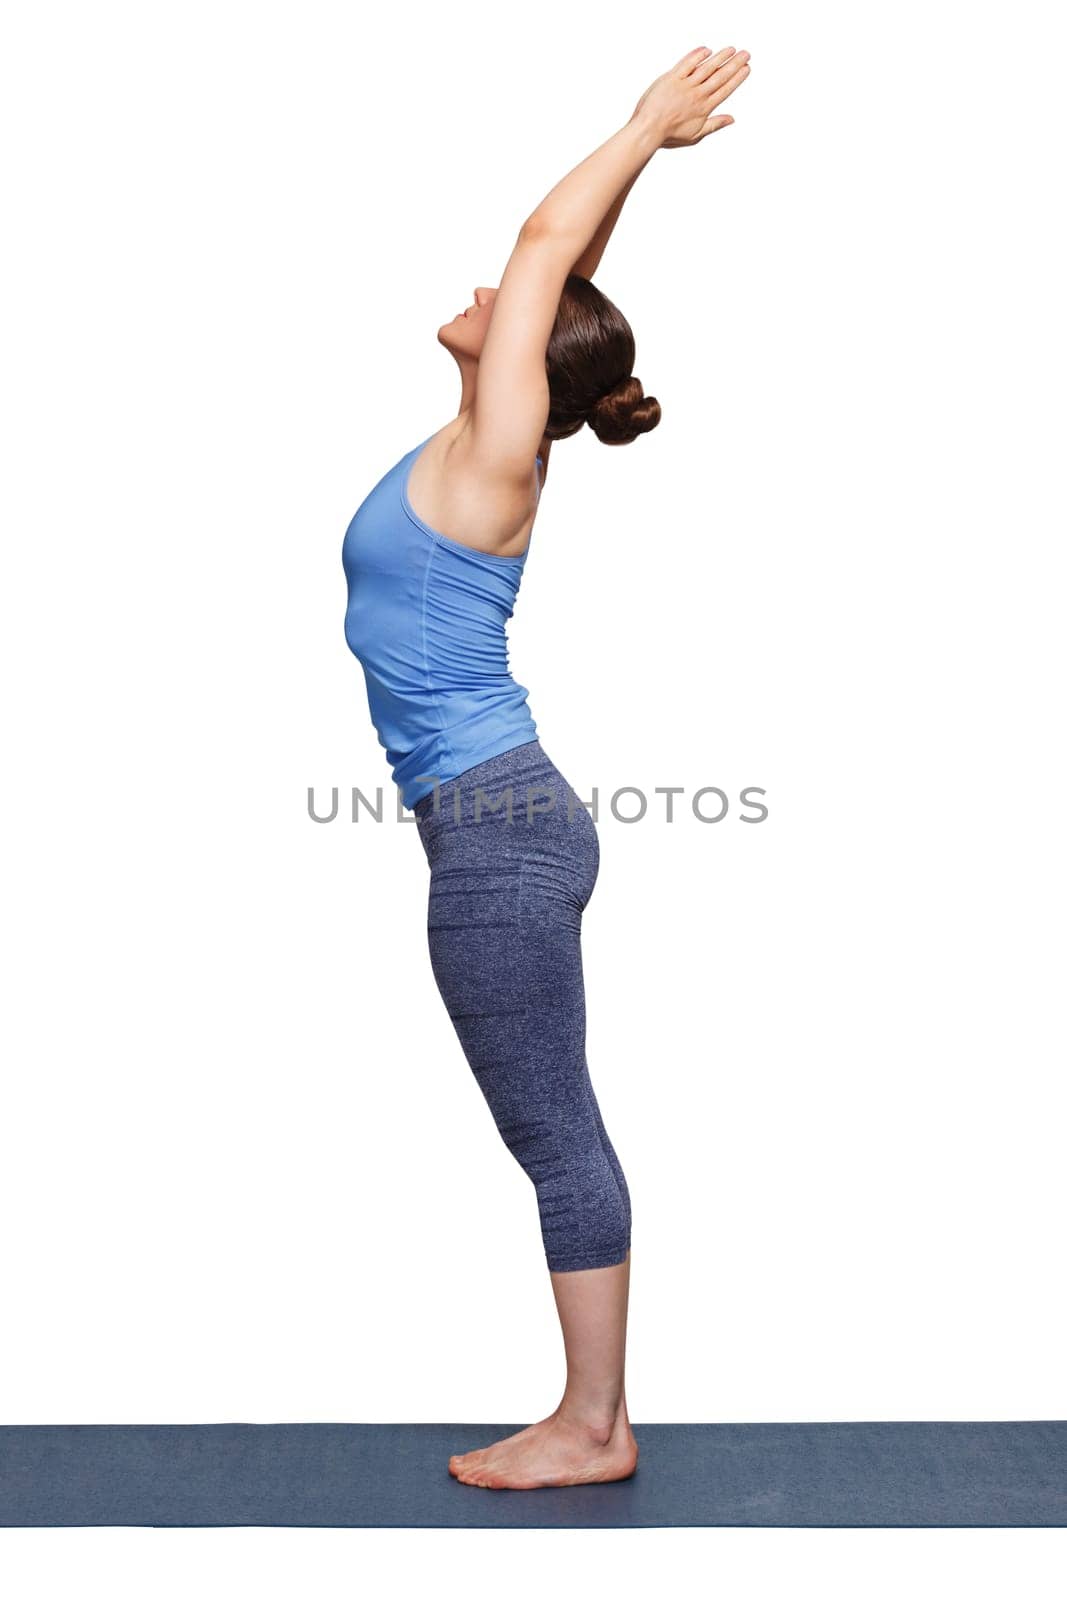 Woman doing Hatha Yoga asana Tadasana - Mountain pose with stretched hands isolated